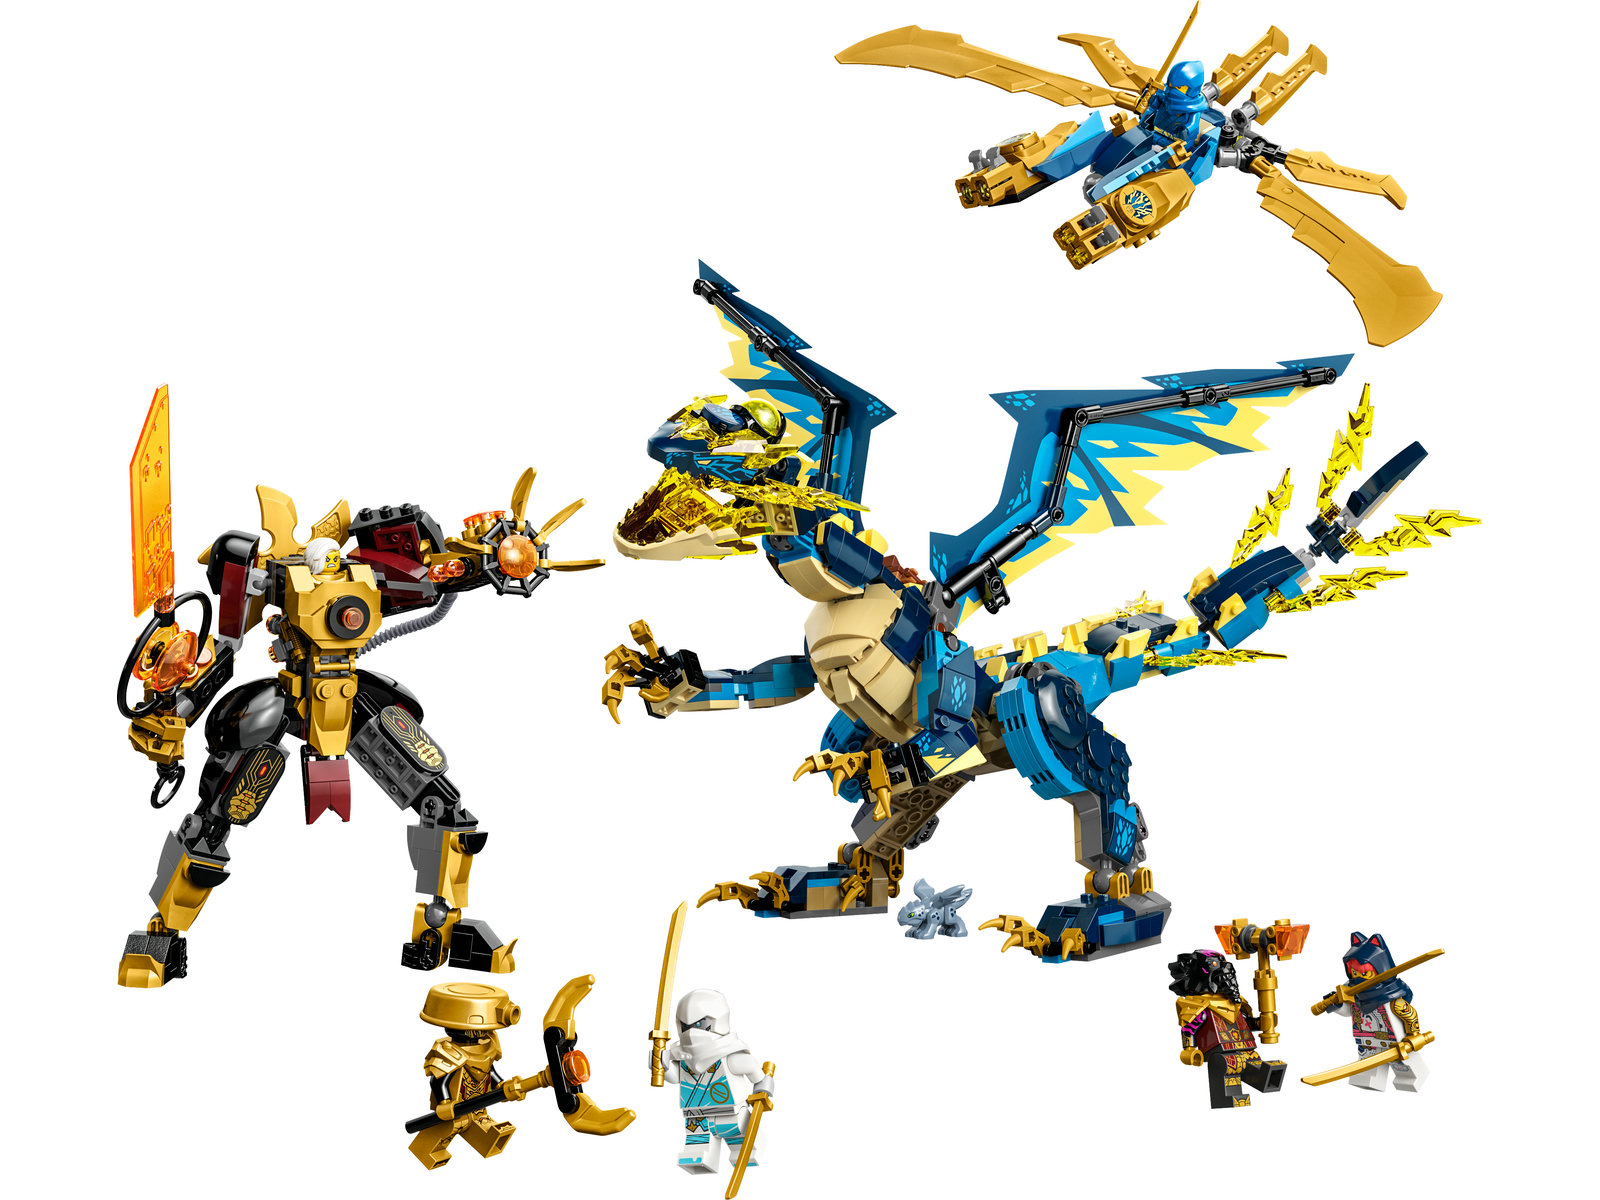 LEGO® Ninjago 71796 - Kaiserliches Mech-Duell gegen den Elementardrachen